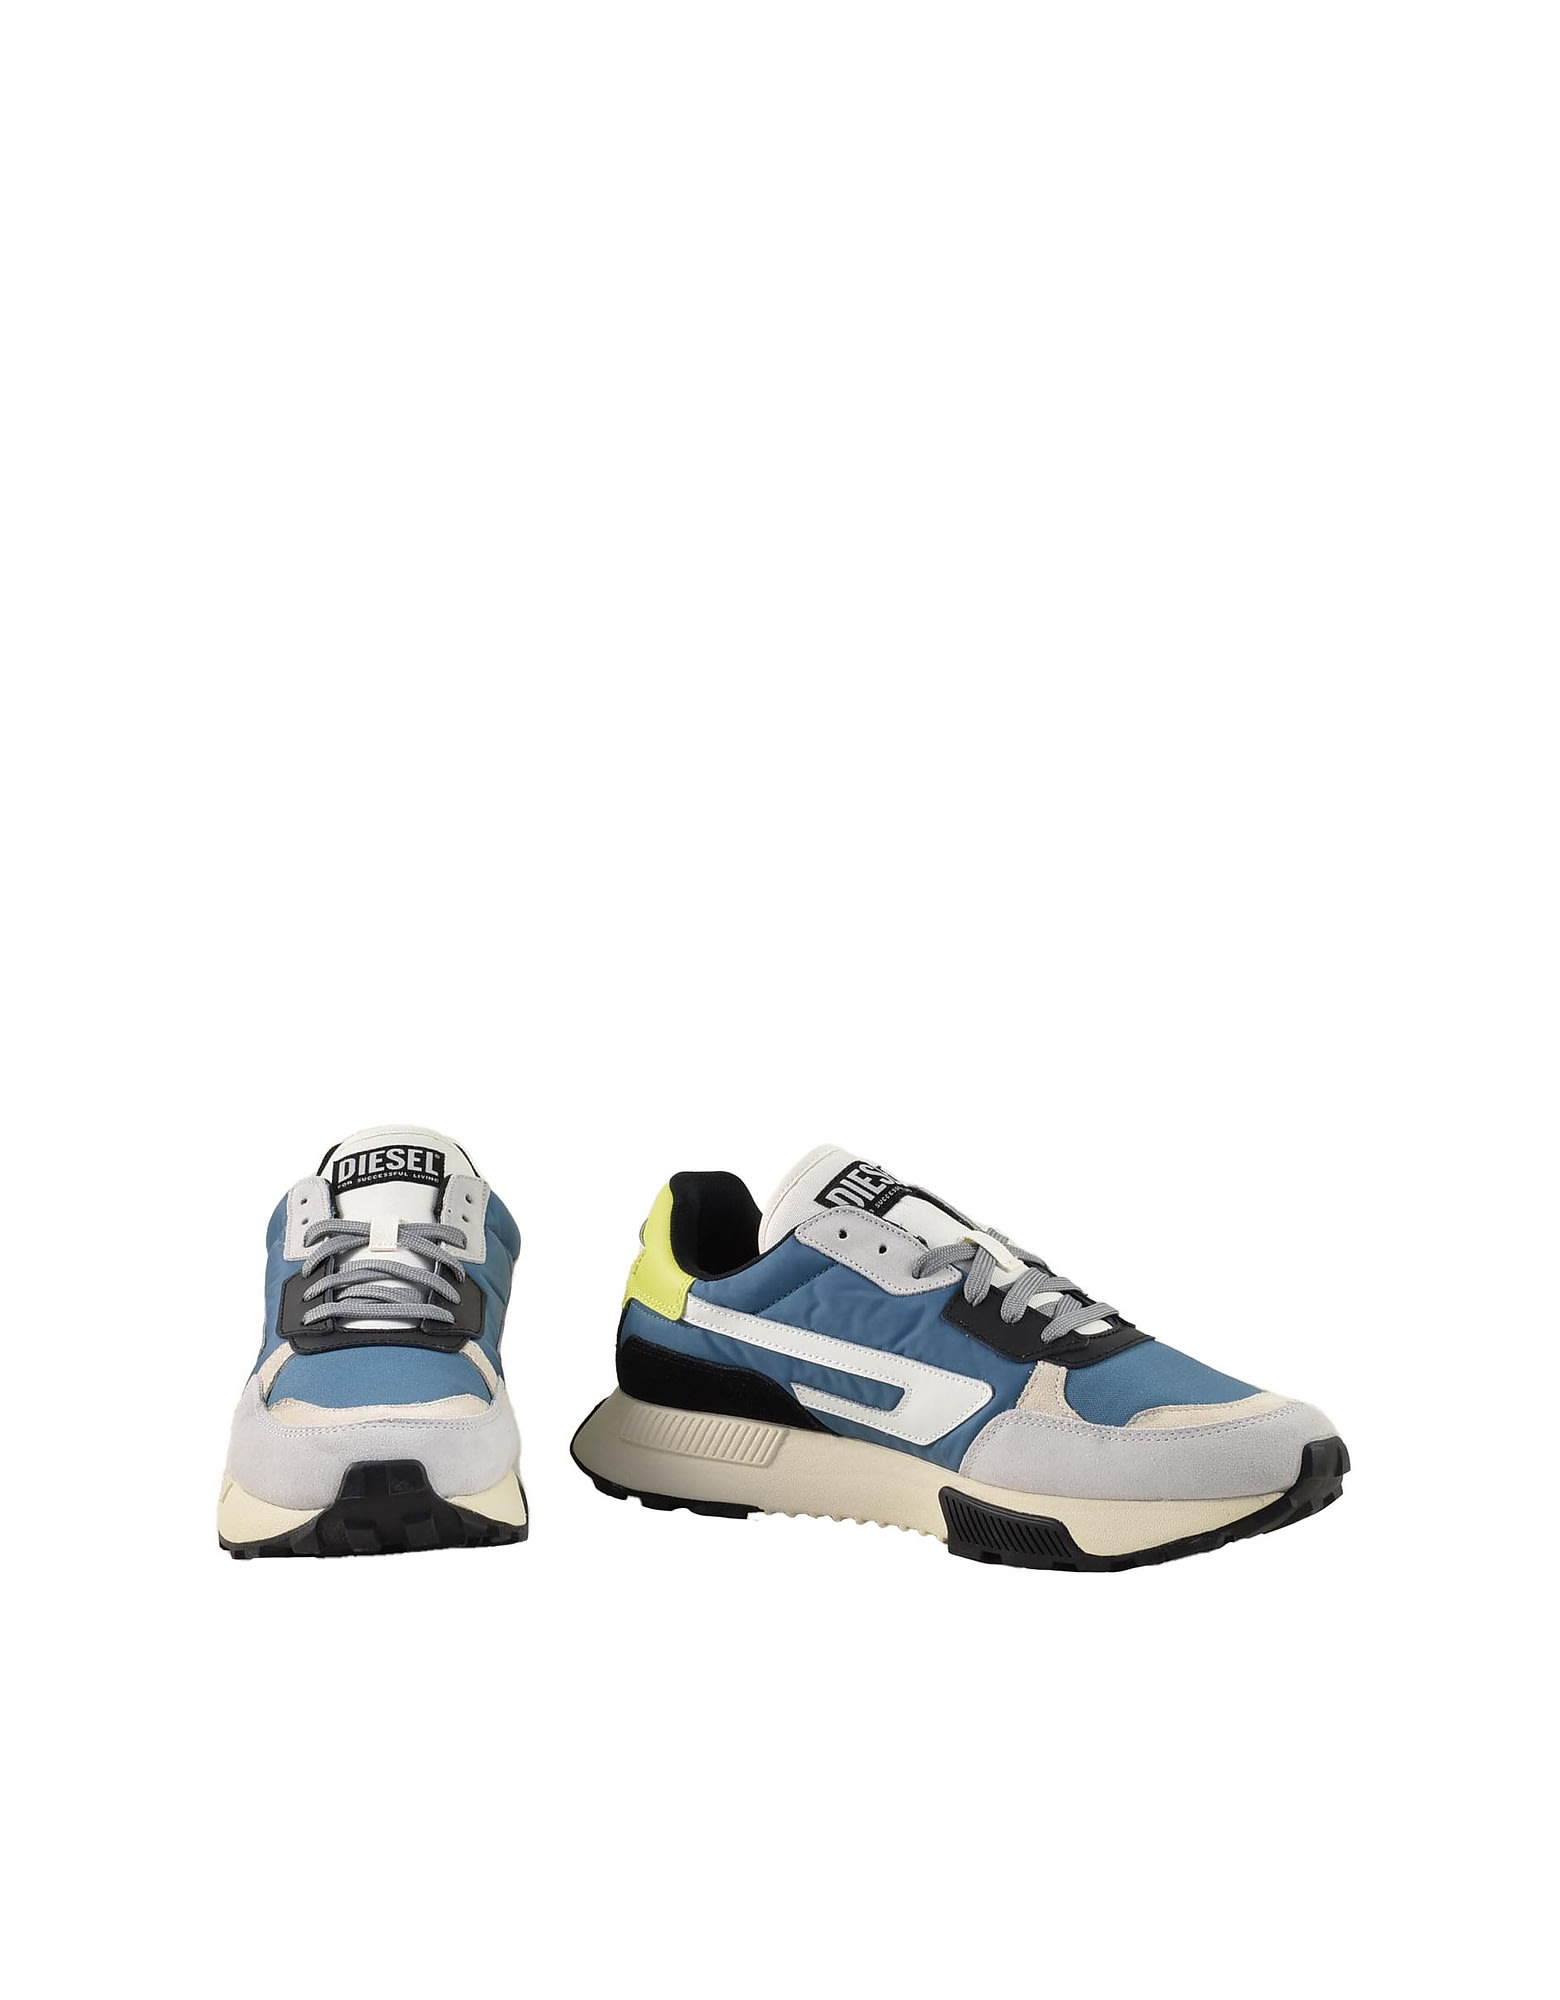 Diesel Mens White / Light Blue Sneakers